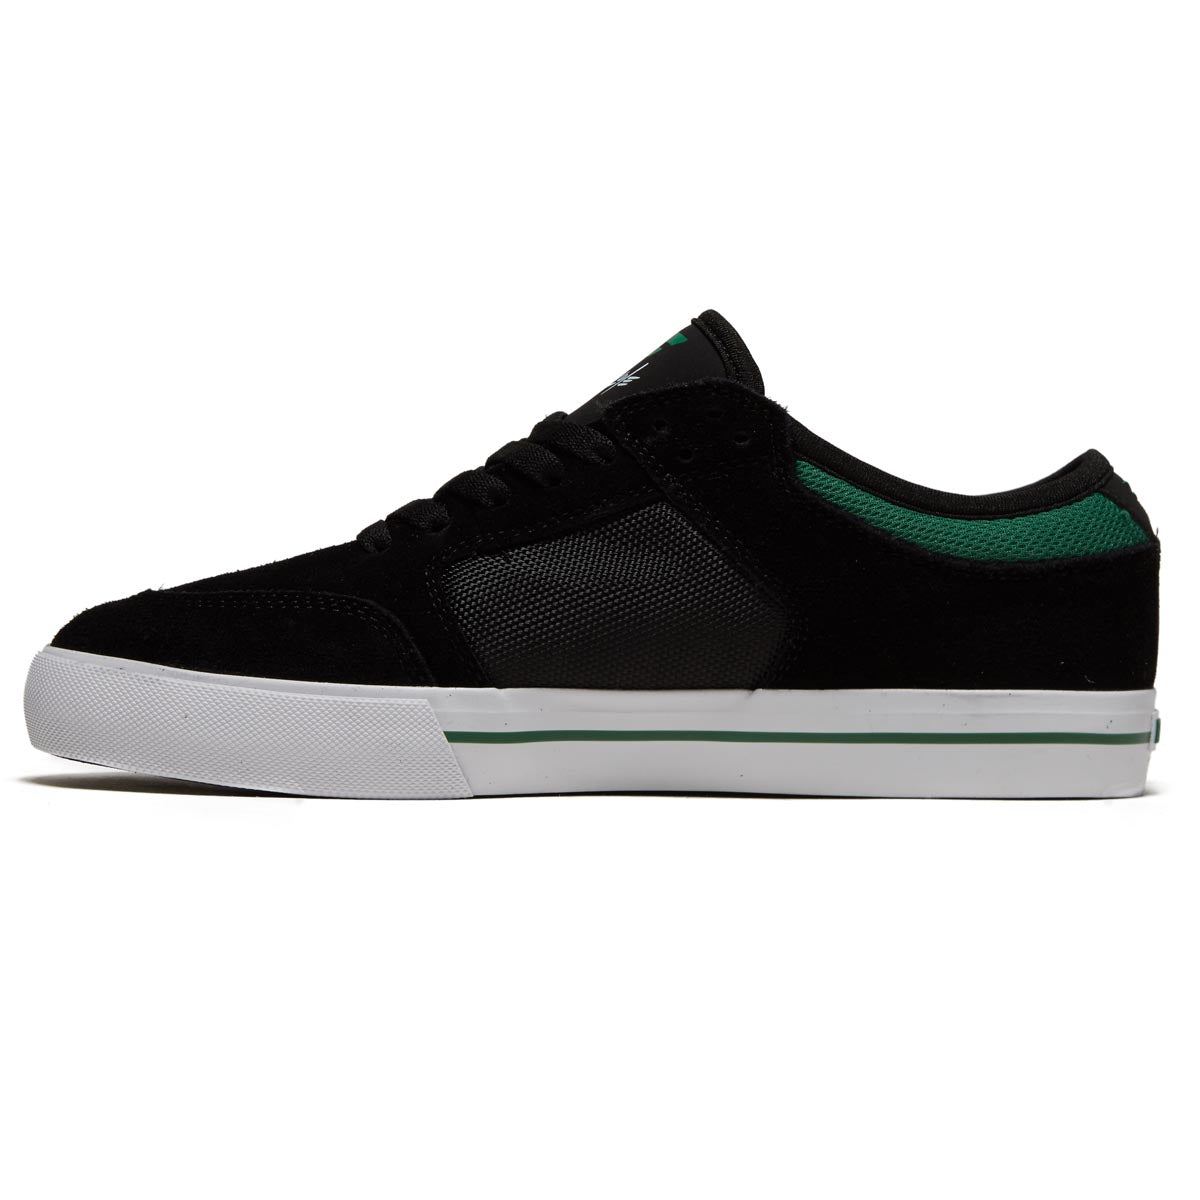 Fallen Ripper Shoes - Black/Green/White image 2